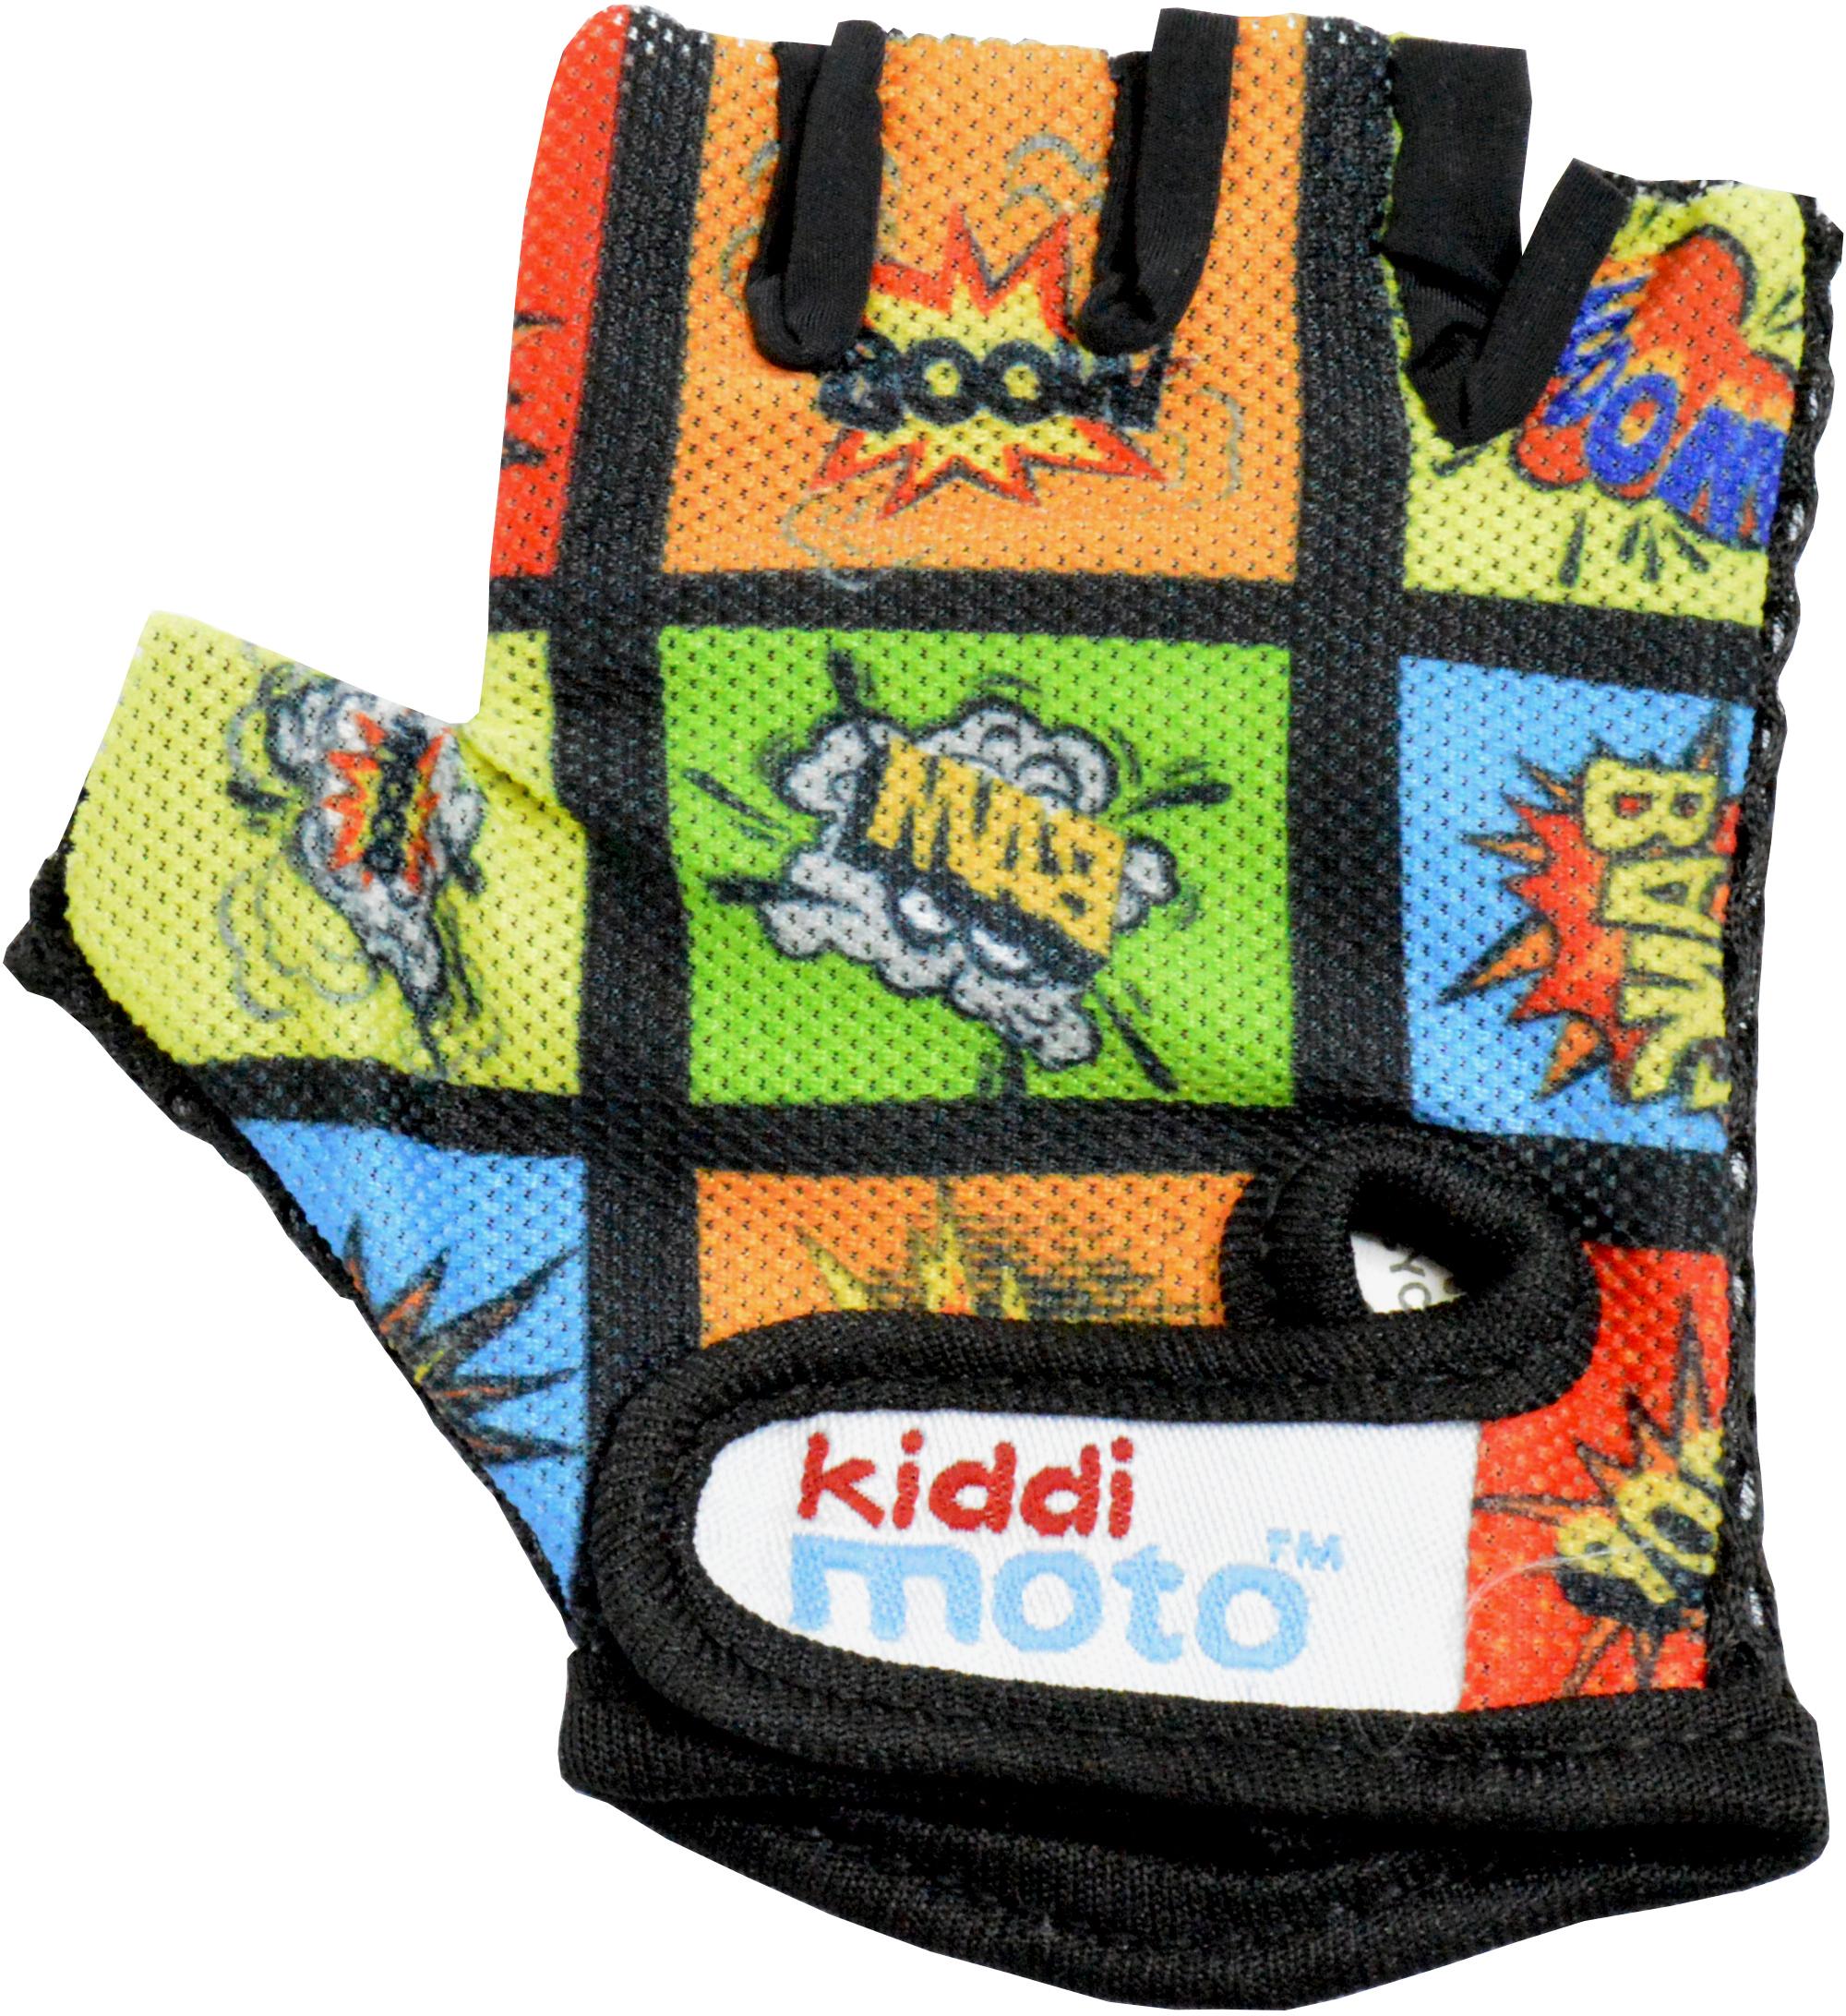 Kiddimoto Comic Gloves Medium